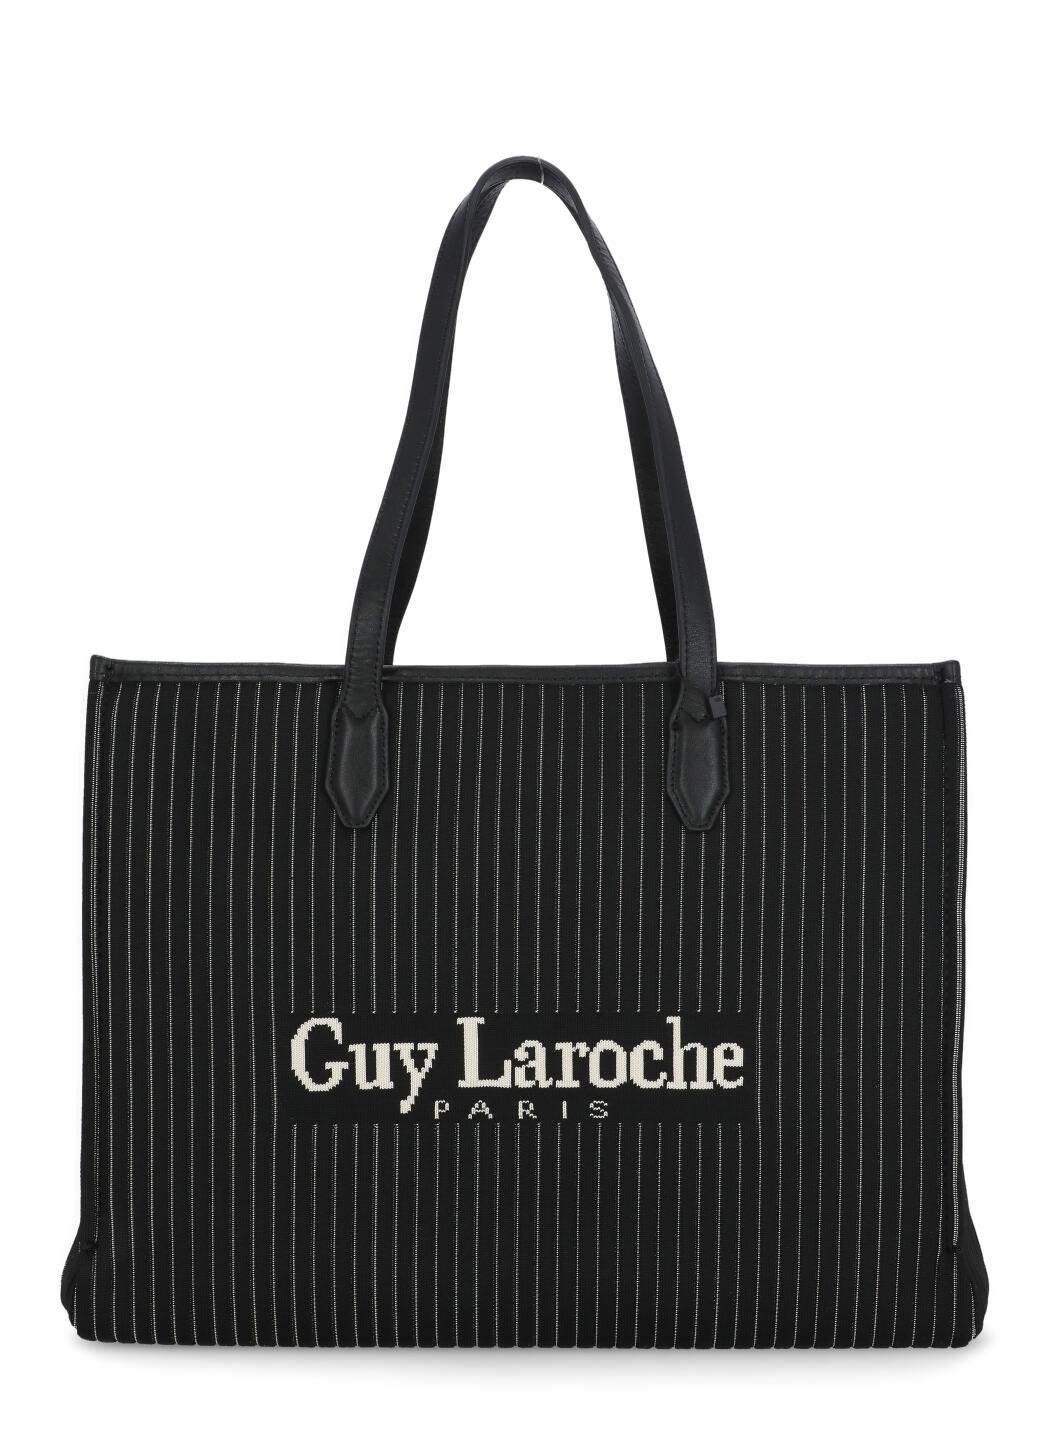 Guy Laroche Bag Cambodia added - Guy Laroche Bag Cambodia